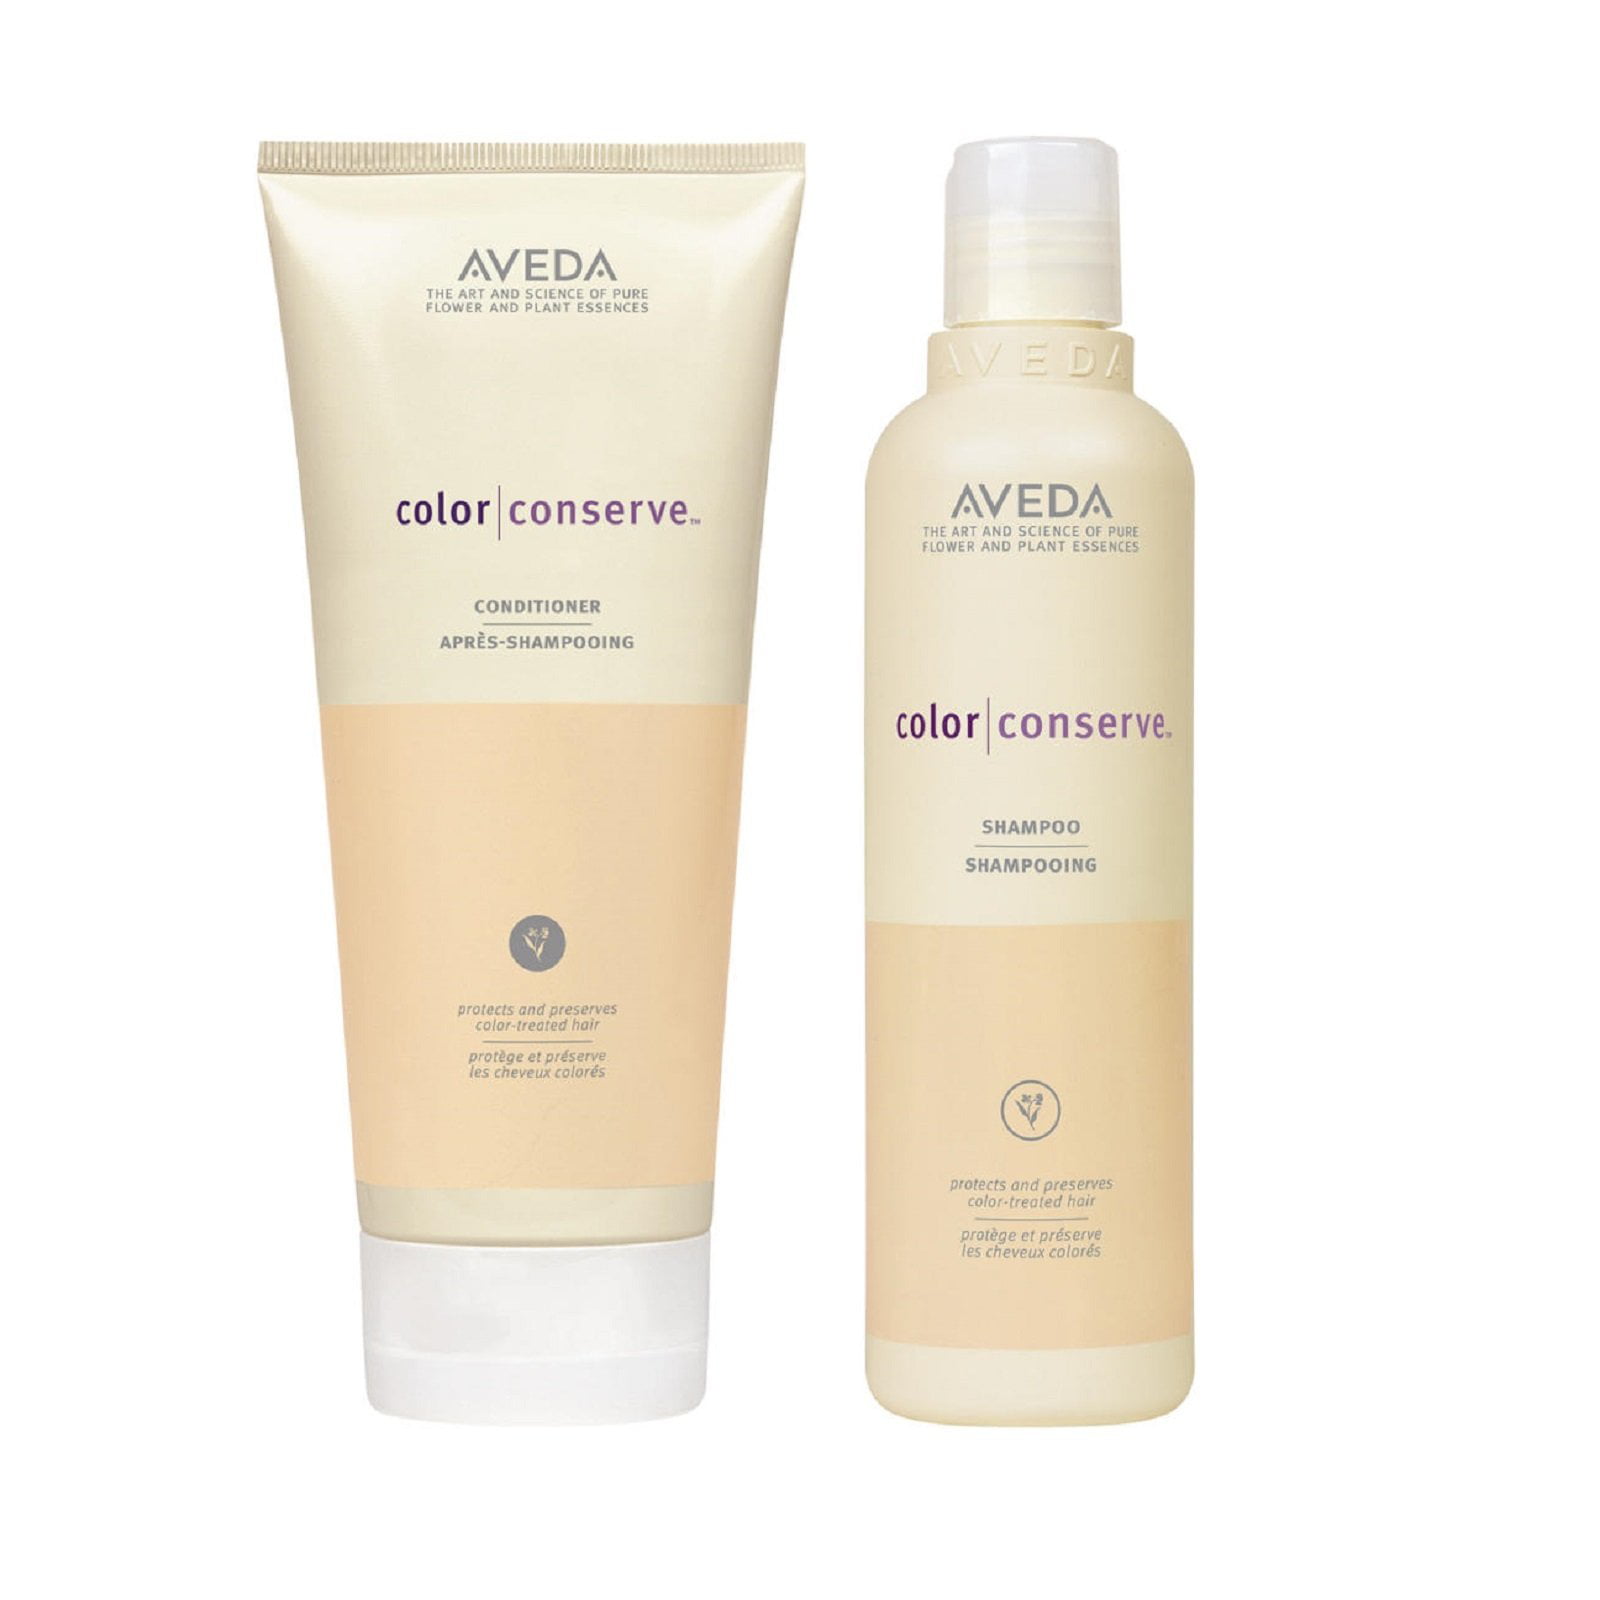 Aveda AVEDA Color Conserve Shampoo 8.5 oz and